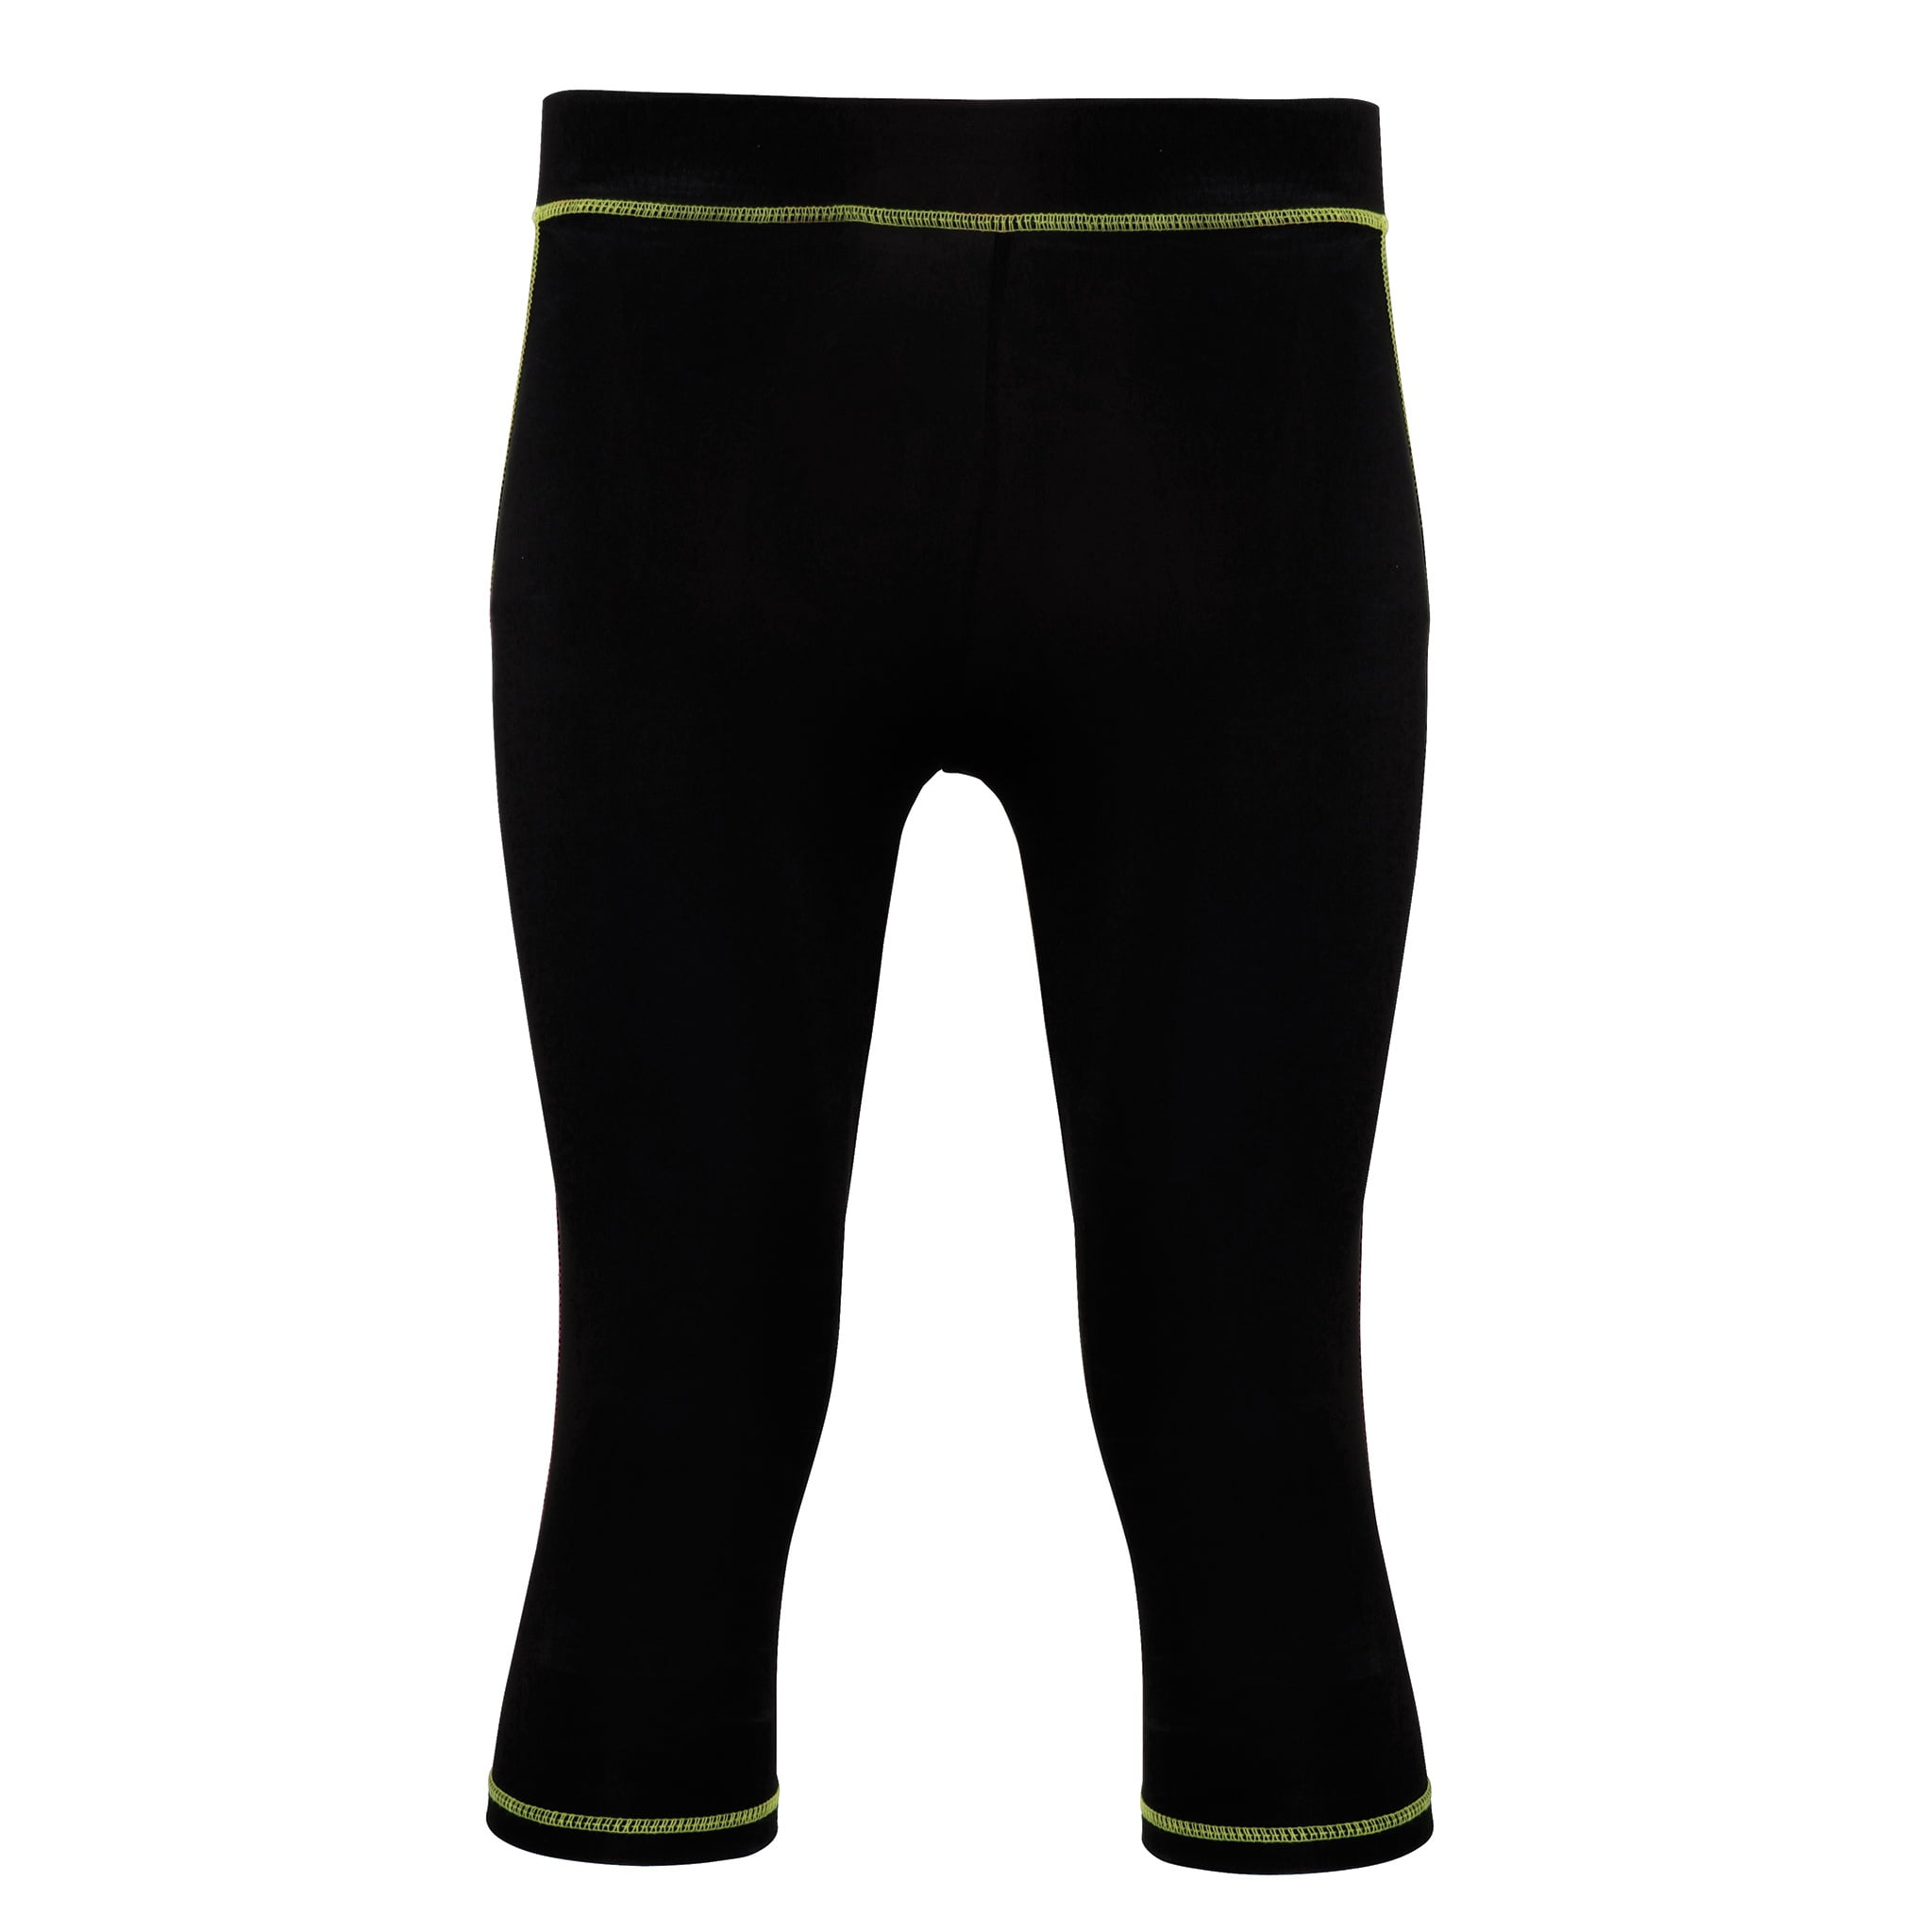 Buy Frackson Black Calf Length Skinny & Slim Fit Gym Wear Yoga Pants  Leggings Workout Active wear | Stretchable Workout Tights | High Waist  Sports Fitness for Girls & Women- Nylon Fiber